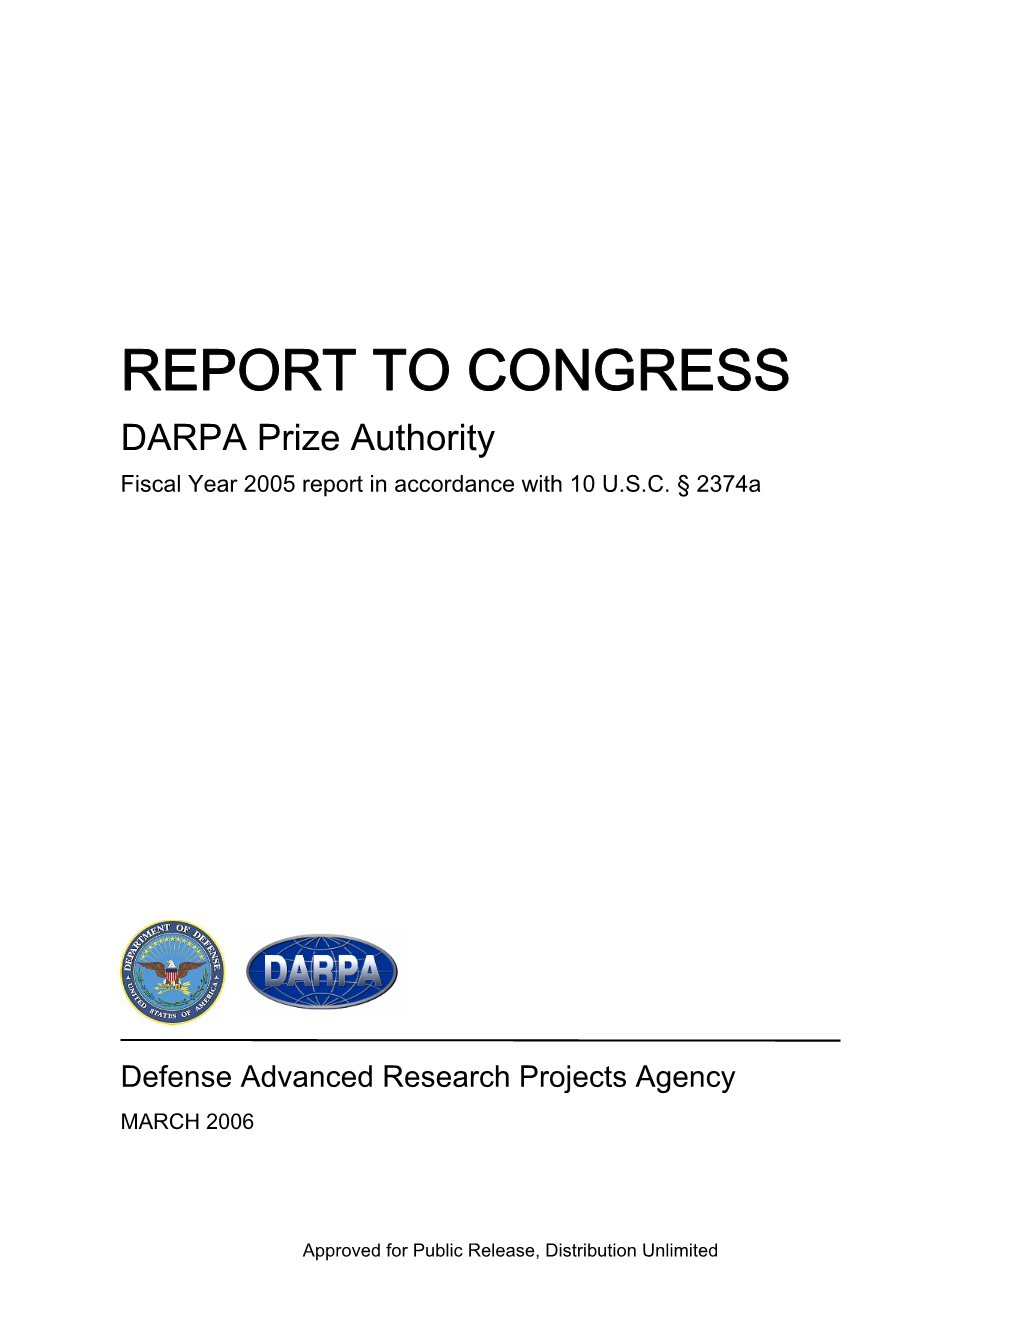 Grand Challenge 2005 Report to Congress